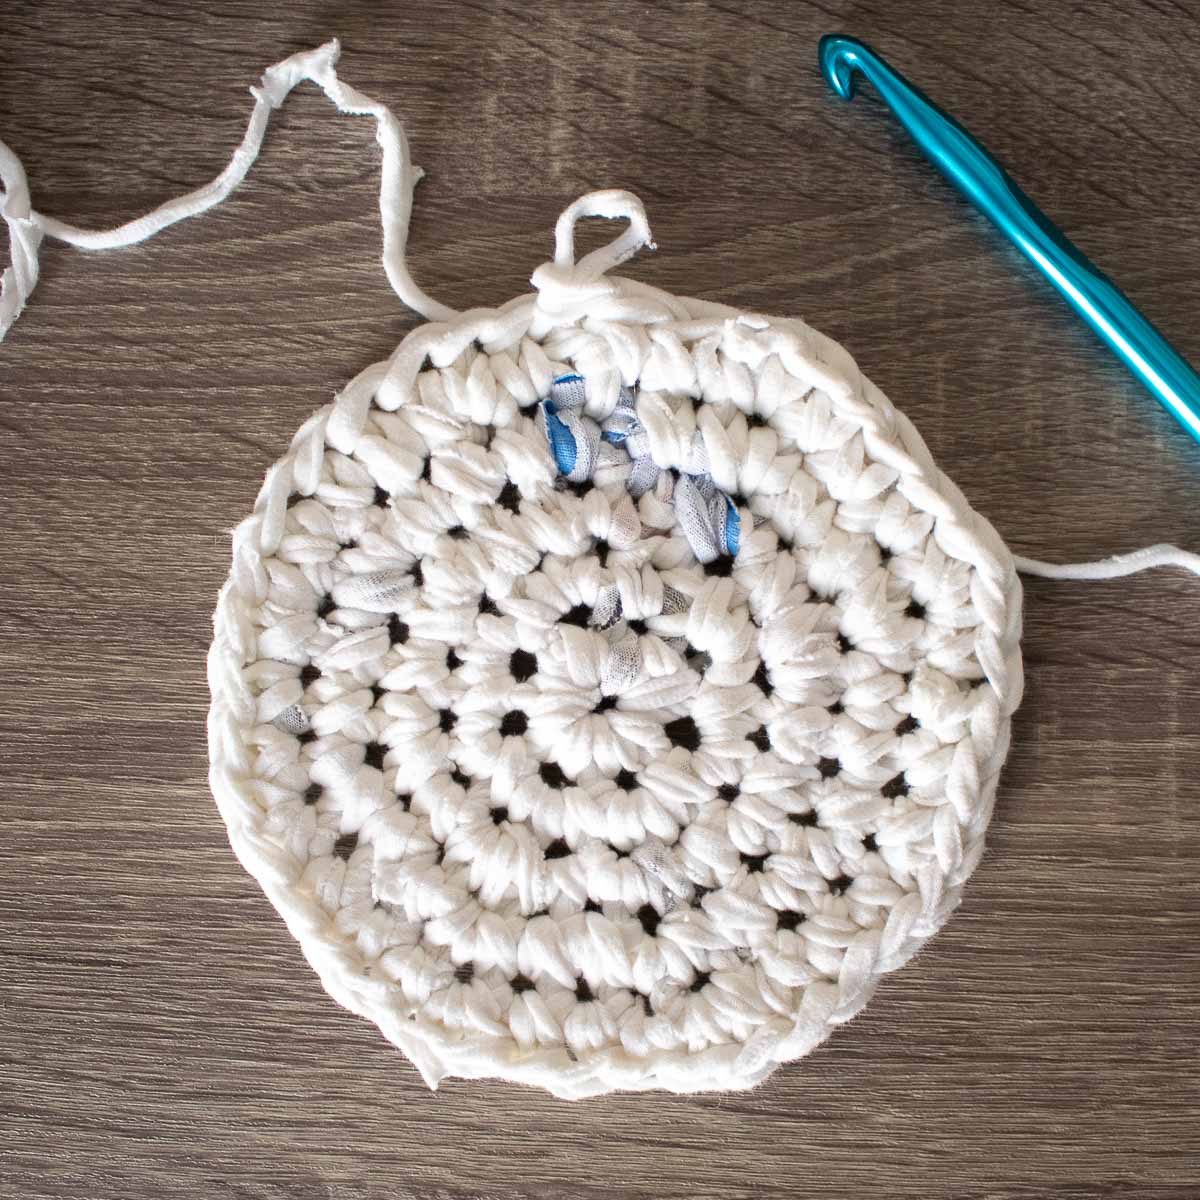 DIY Crochet Heat Pad with Fiber-Lok Non-Skid Backing - Resin Crafts Blog